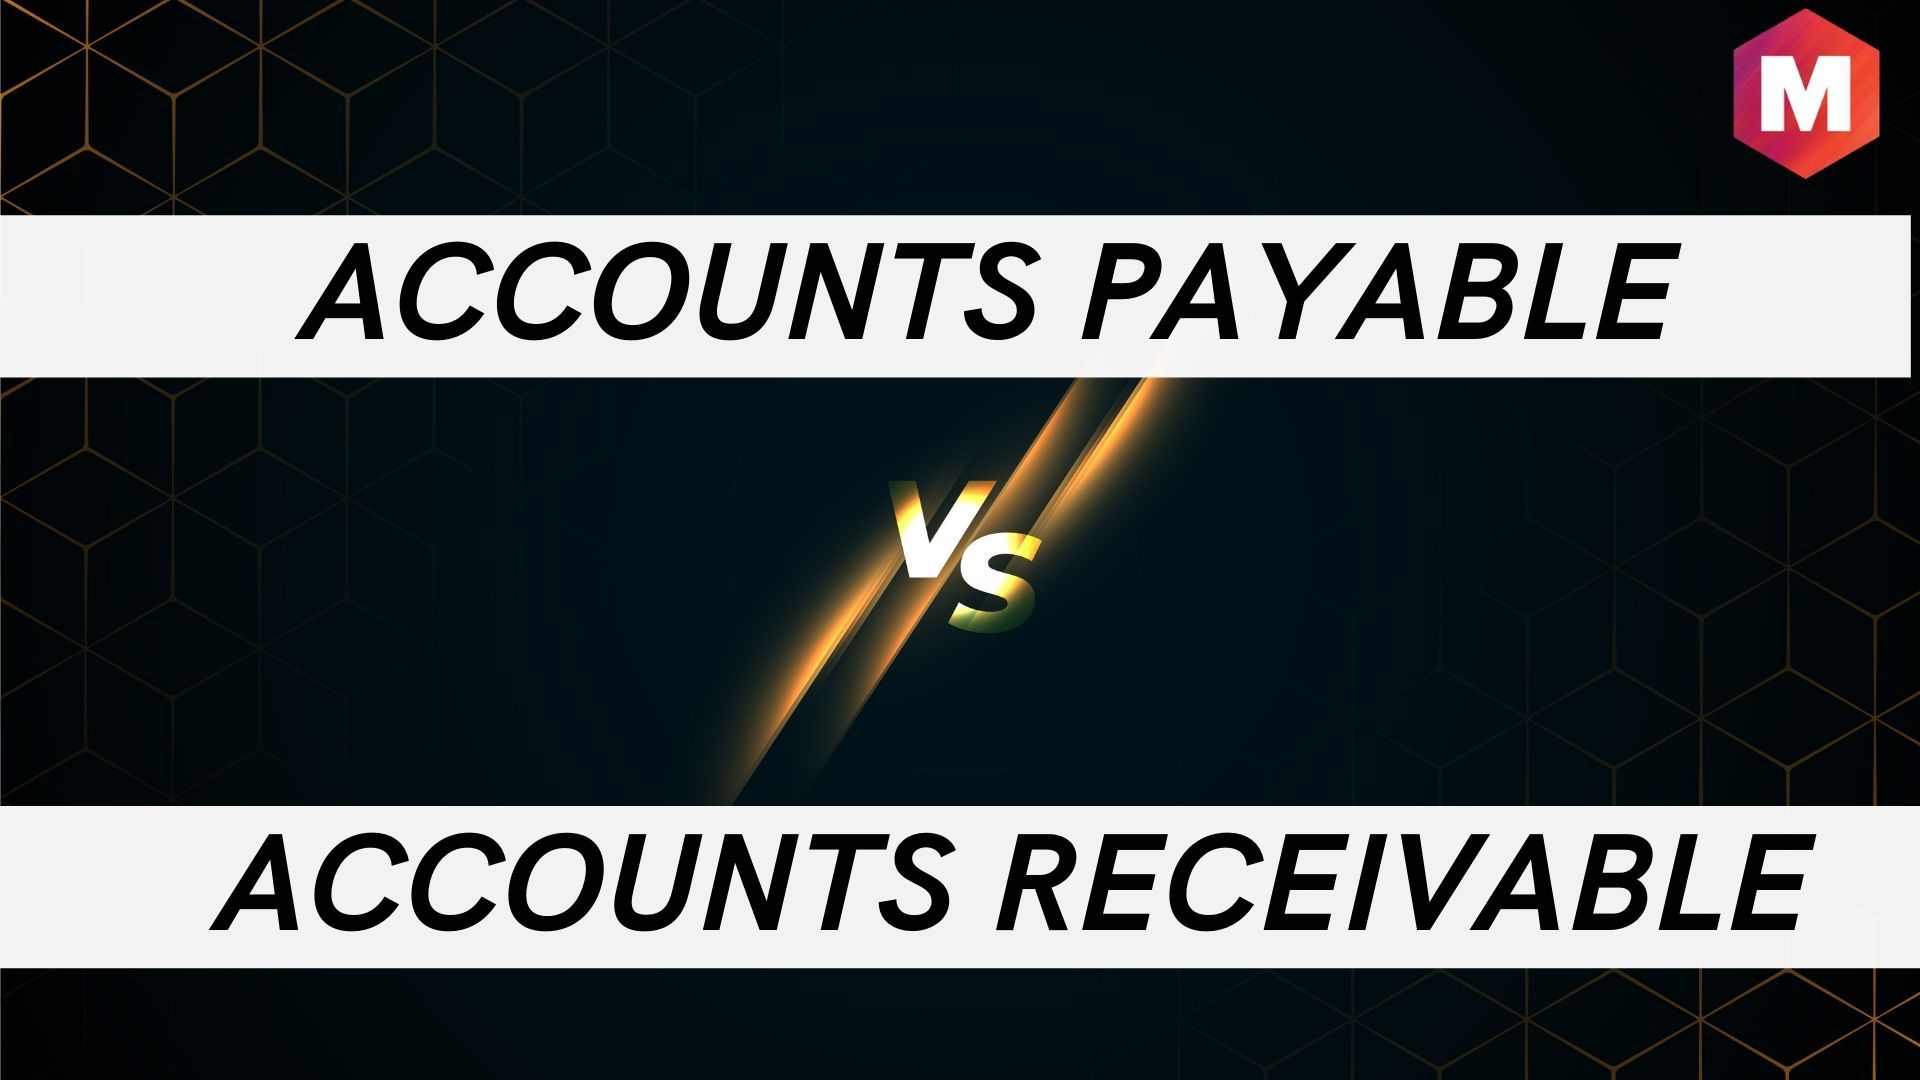 Accounts Payable vs Accounts Receivable